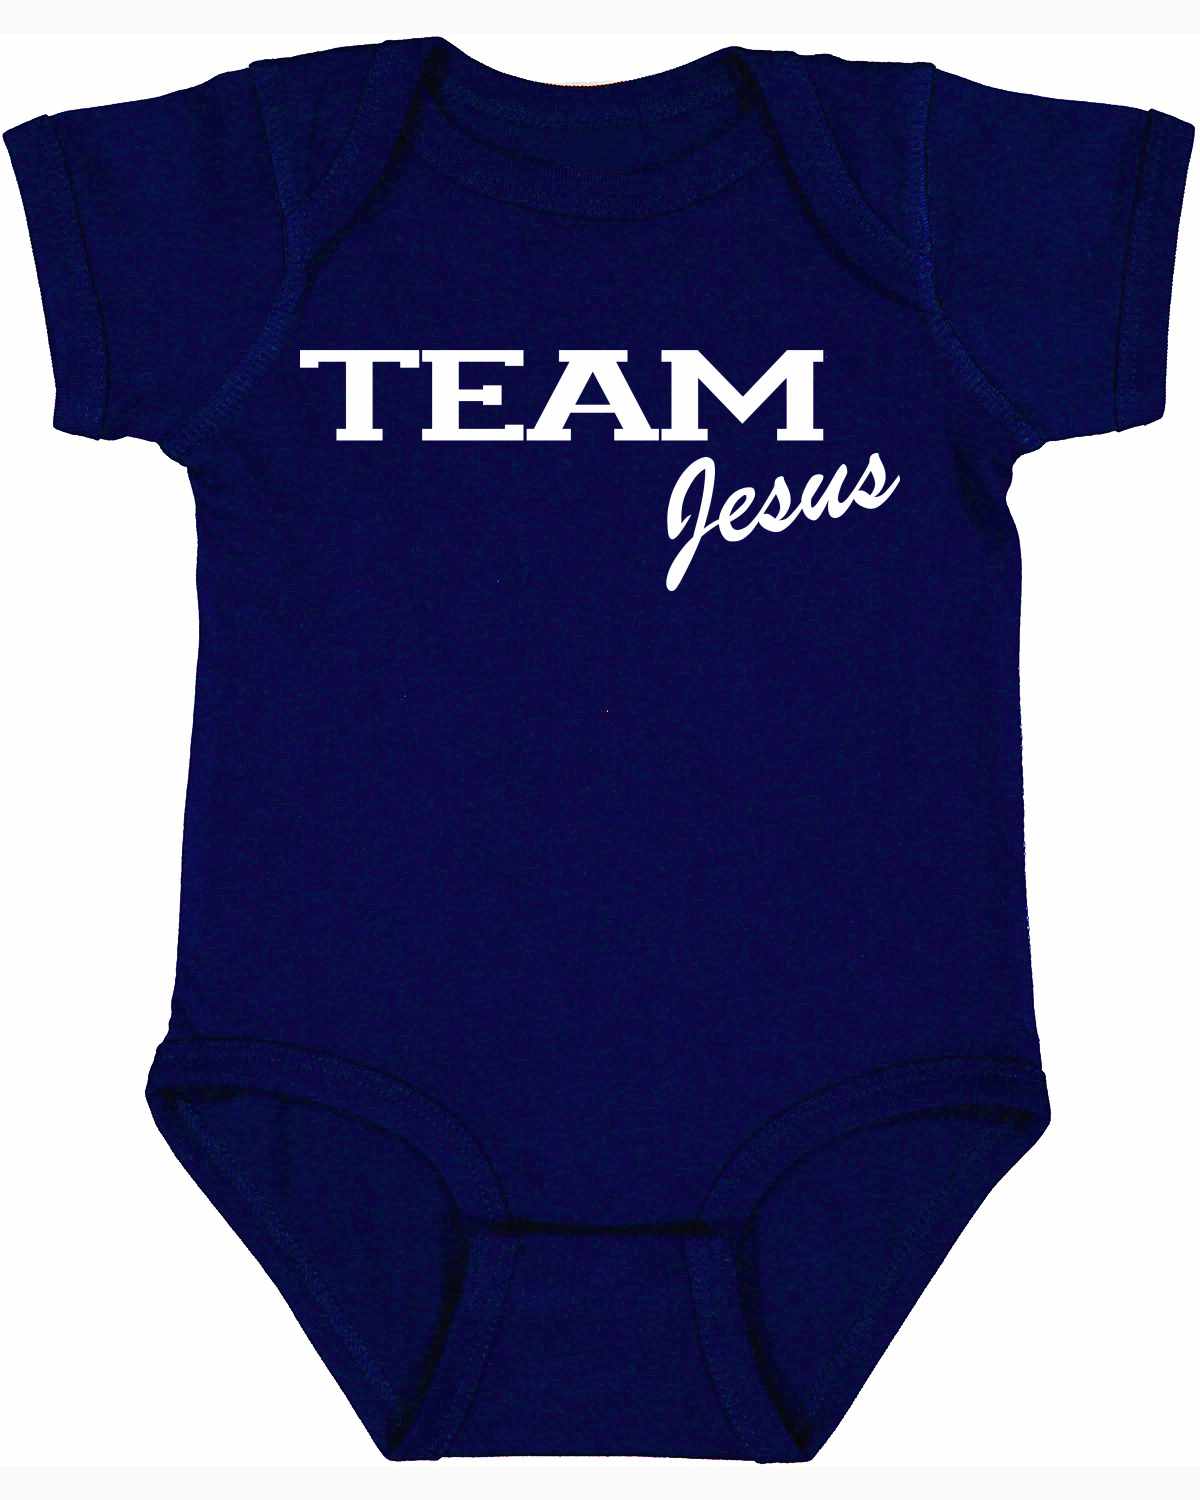 TEAM Jesus Infant BodySuit (#225-10)